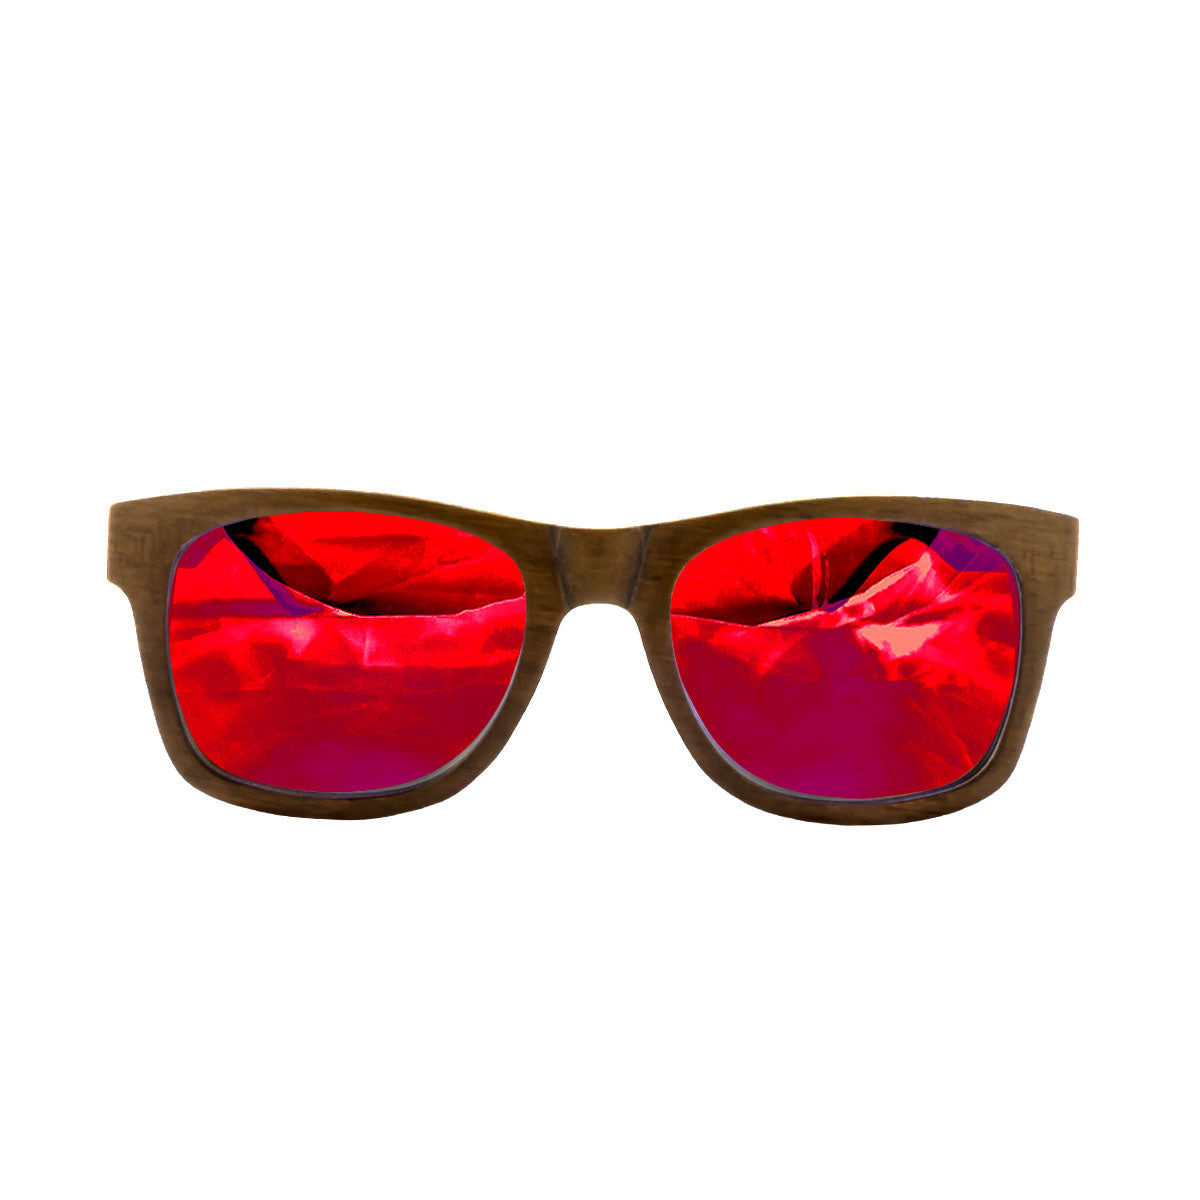 Skateboard Wood Sunglasses, Red Mirror Lens